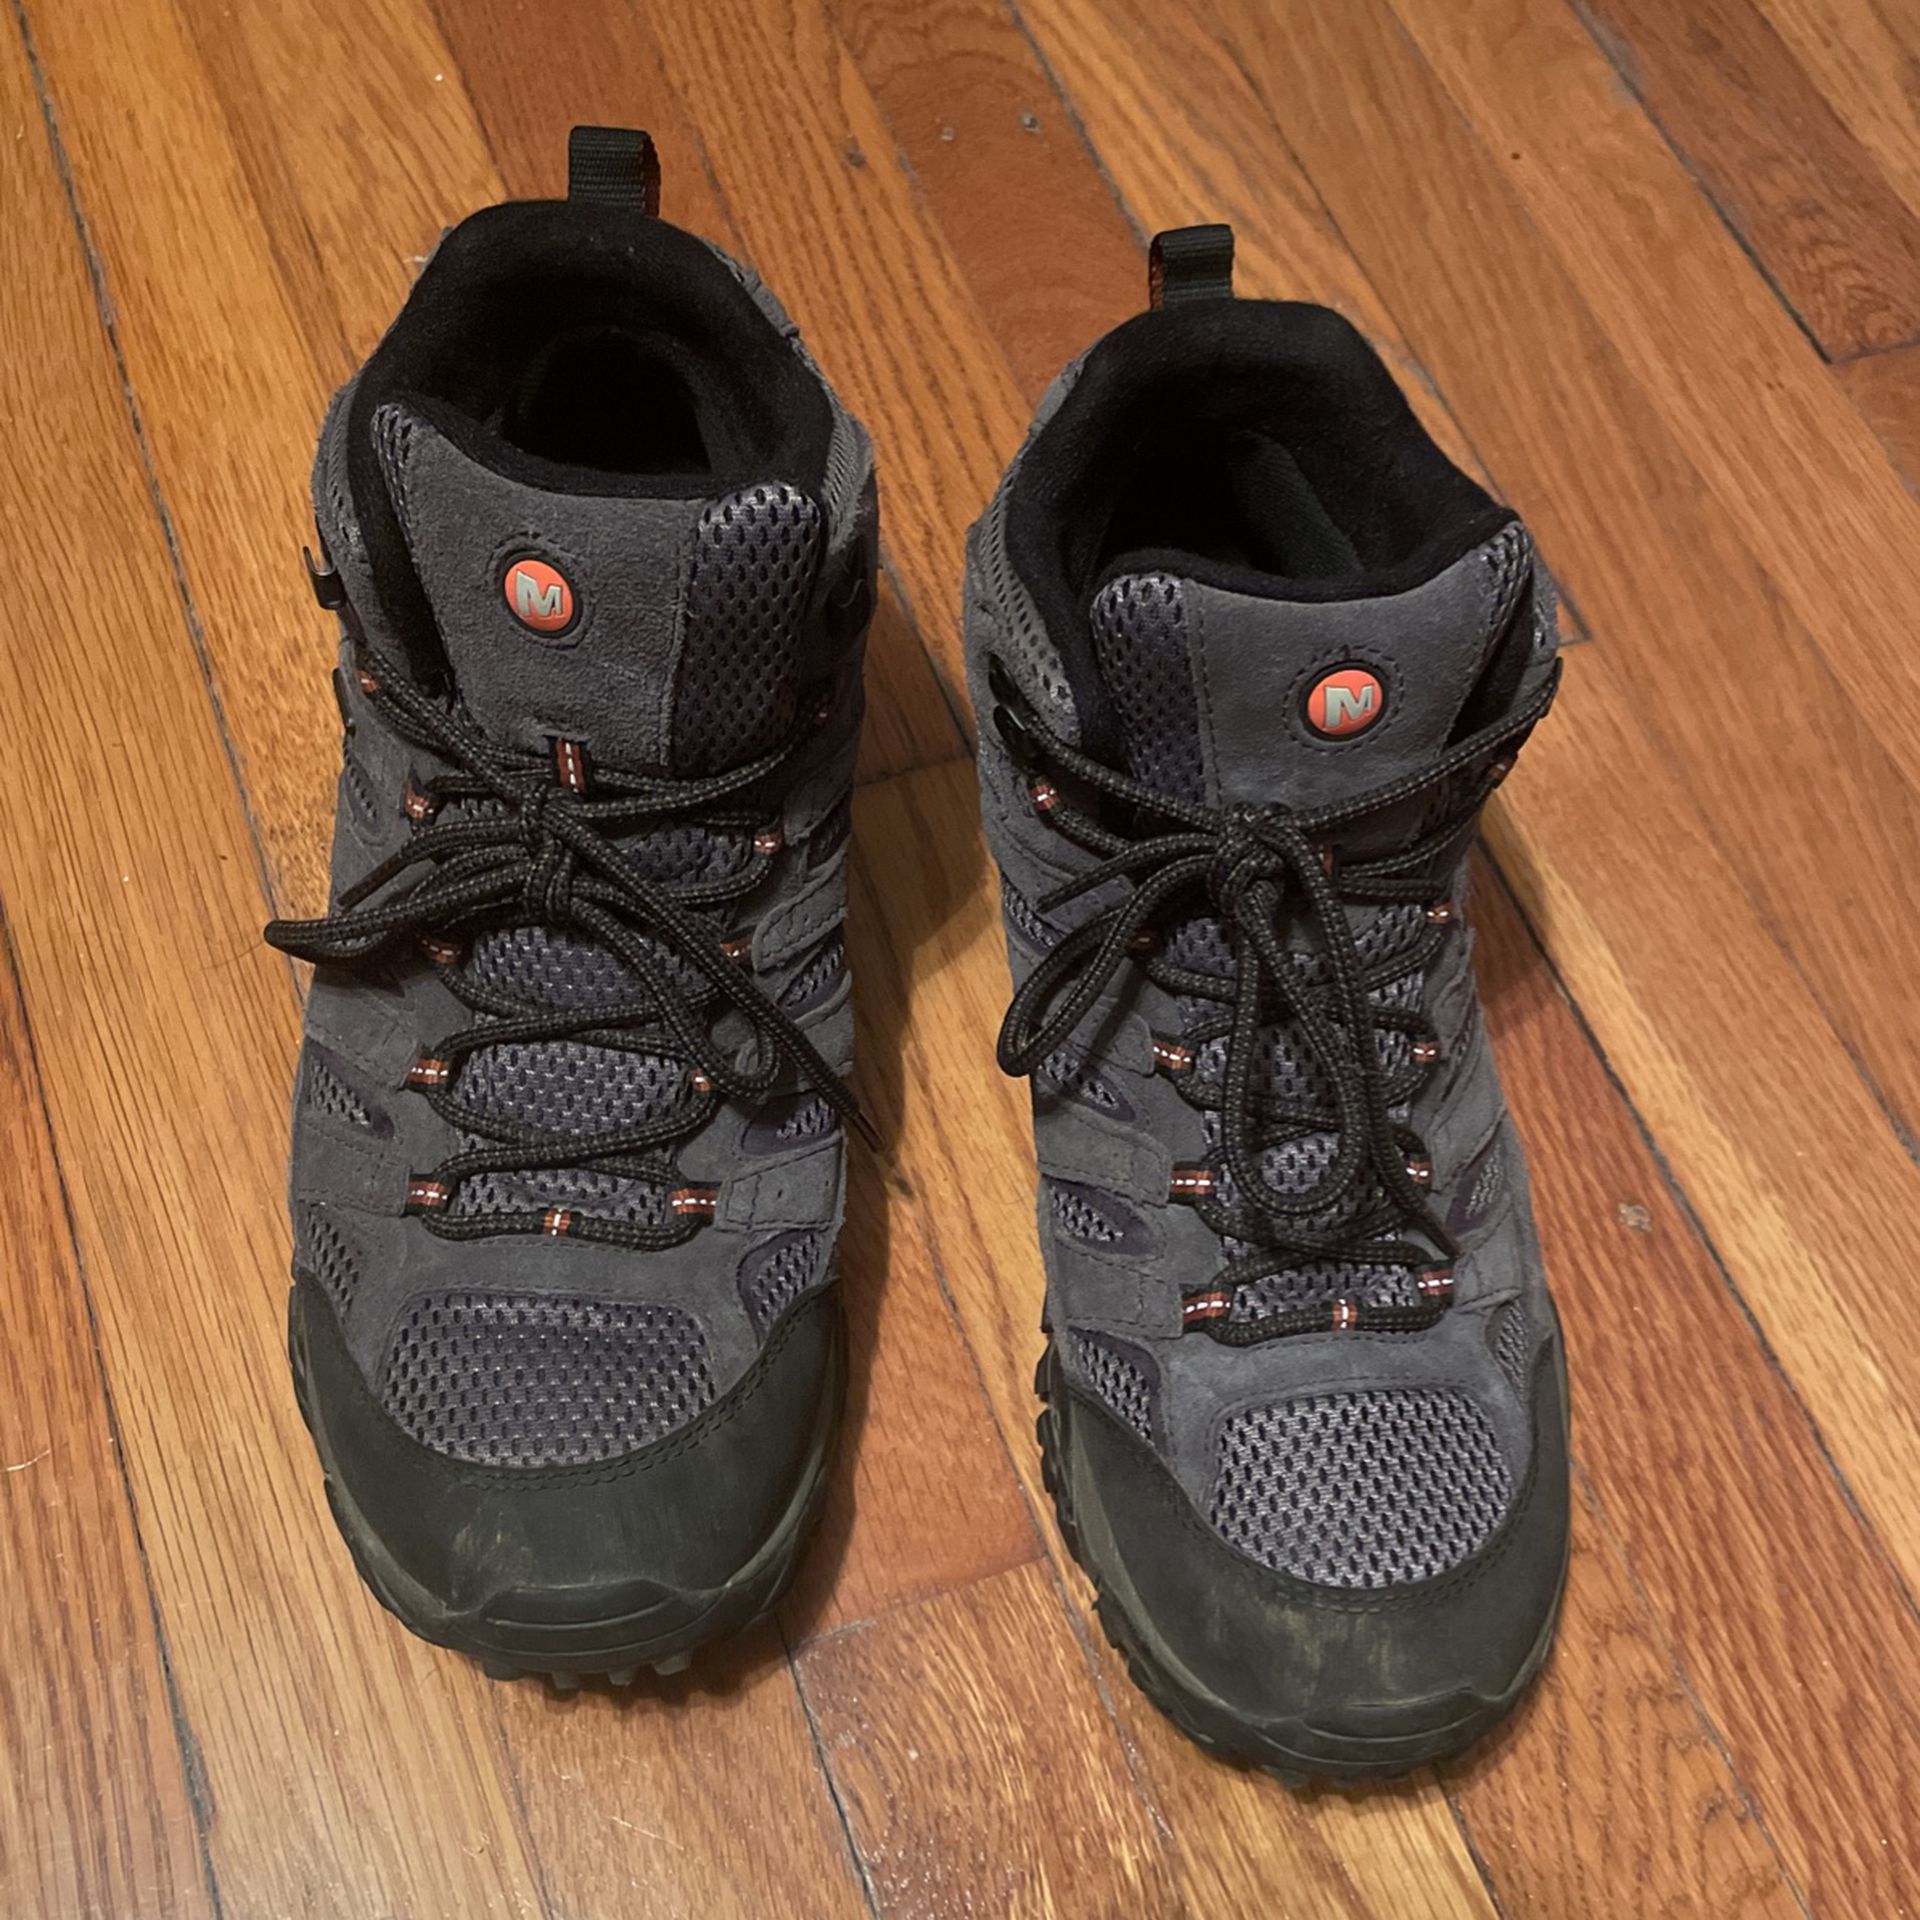 Merrill men’s Size 10 Hiking Boots